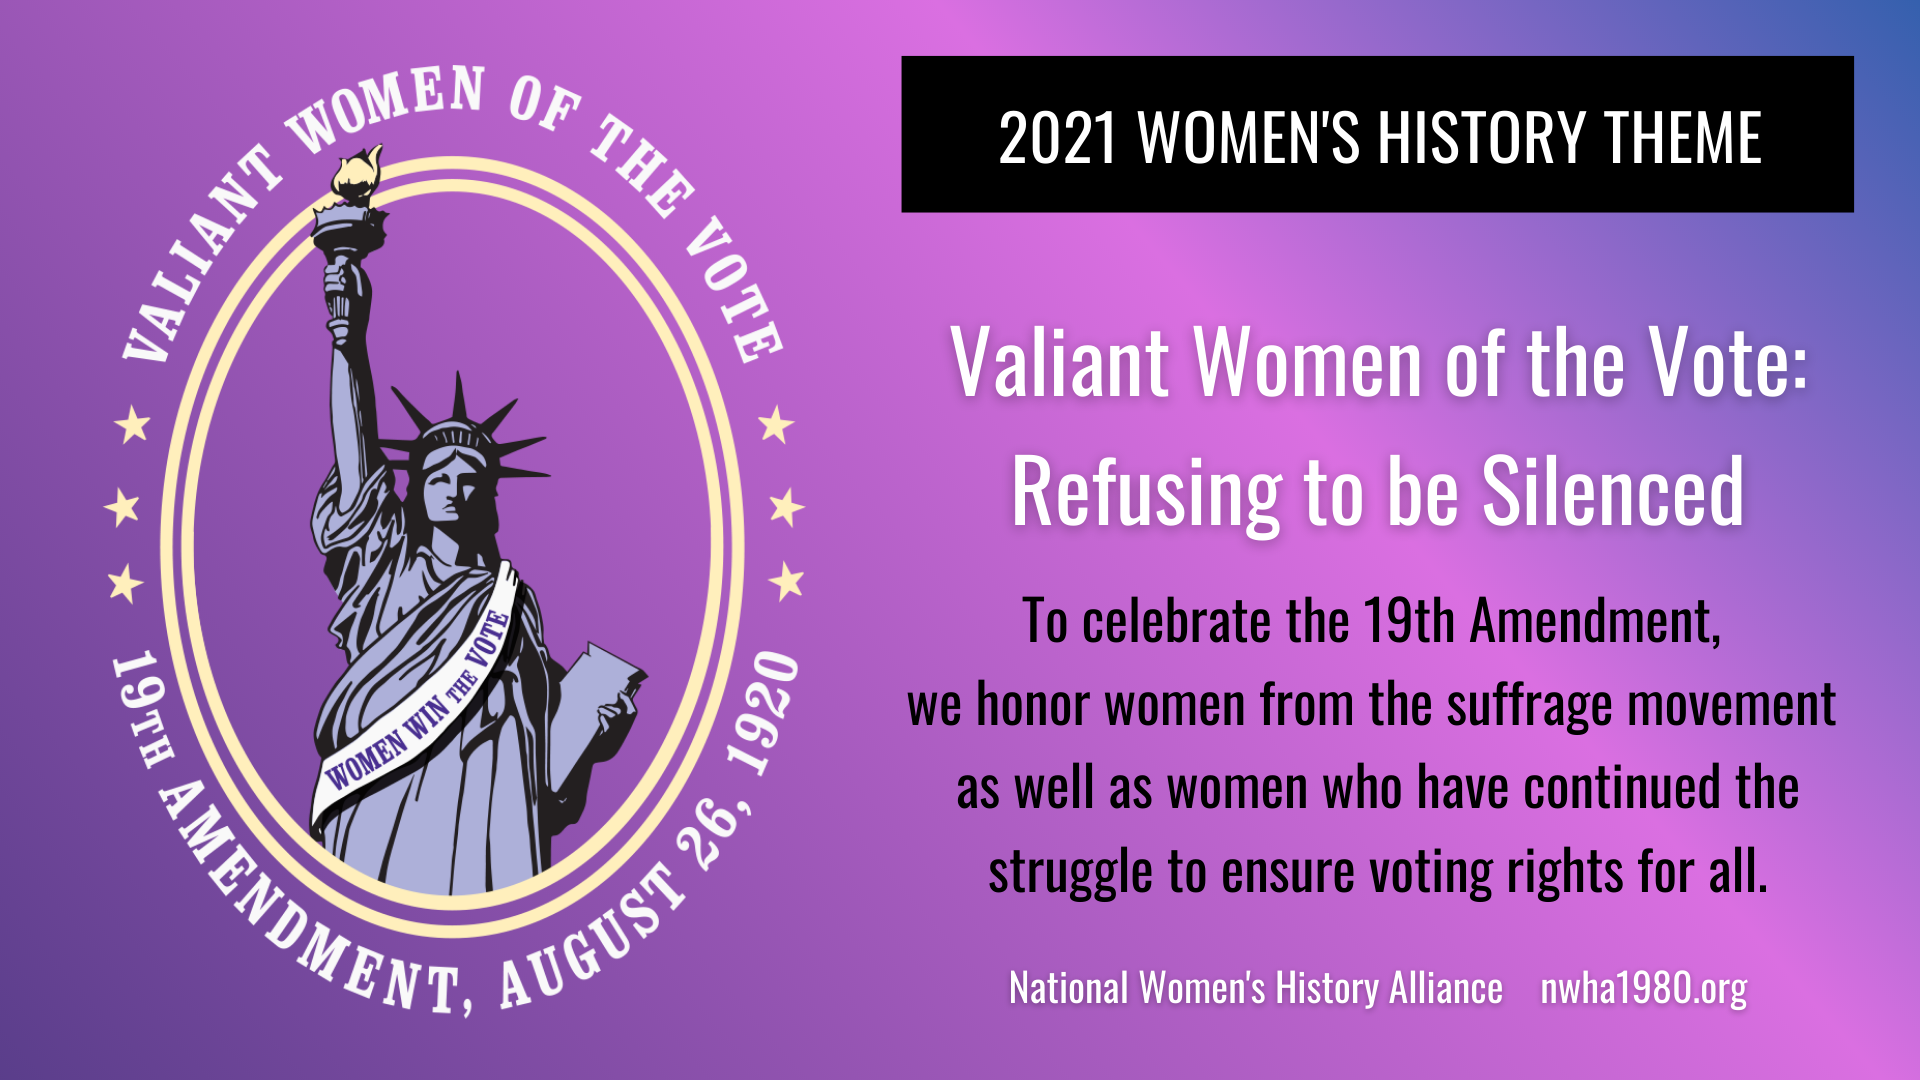 2021 Women's History Theme National Women's History Alliance